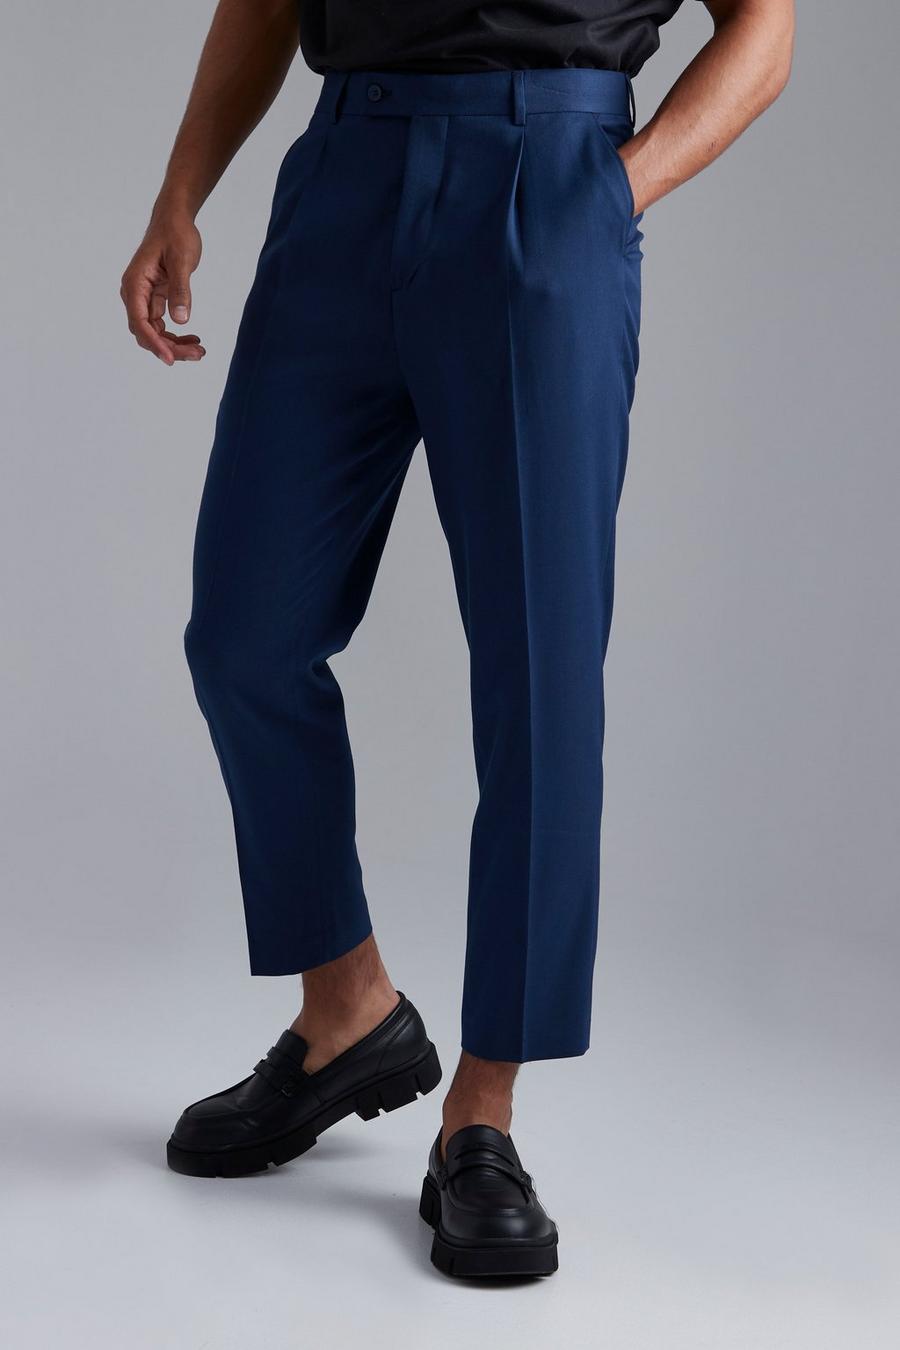 Pantaloni affusolati in Stretch super comodi, Navy blu oltremare